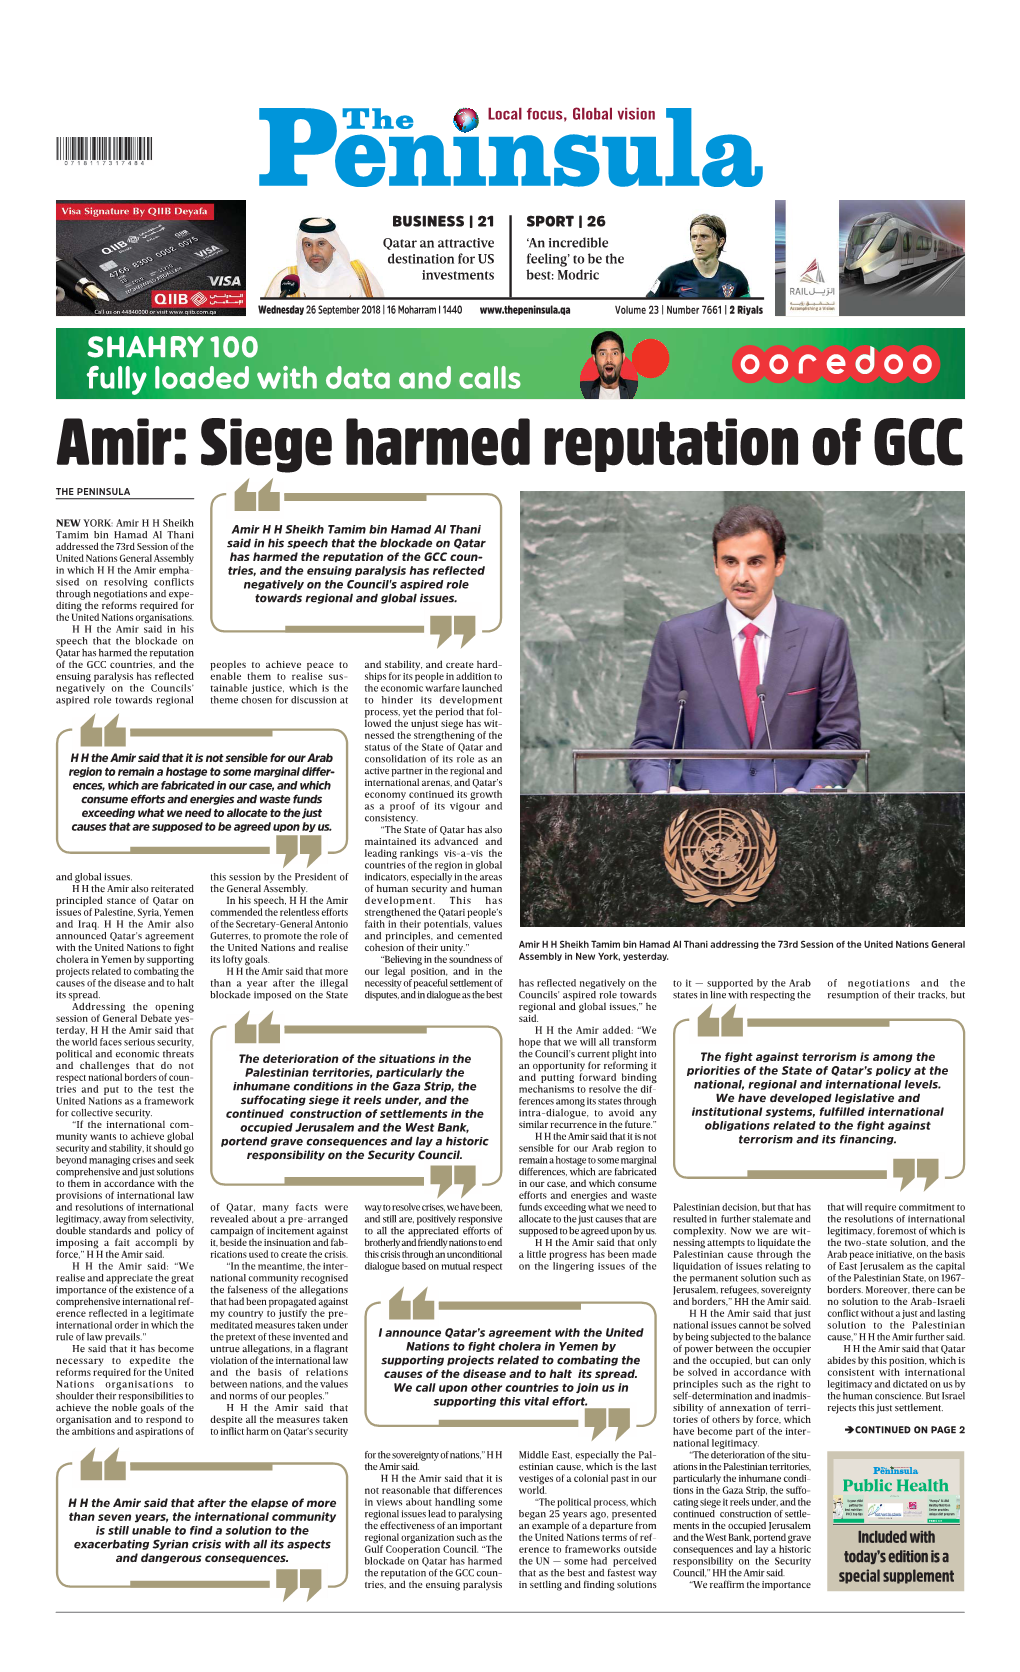 Siege Harmed Reputation of GCC